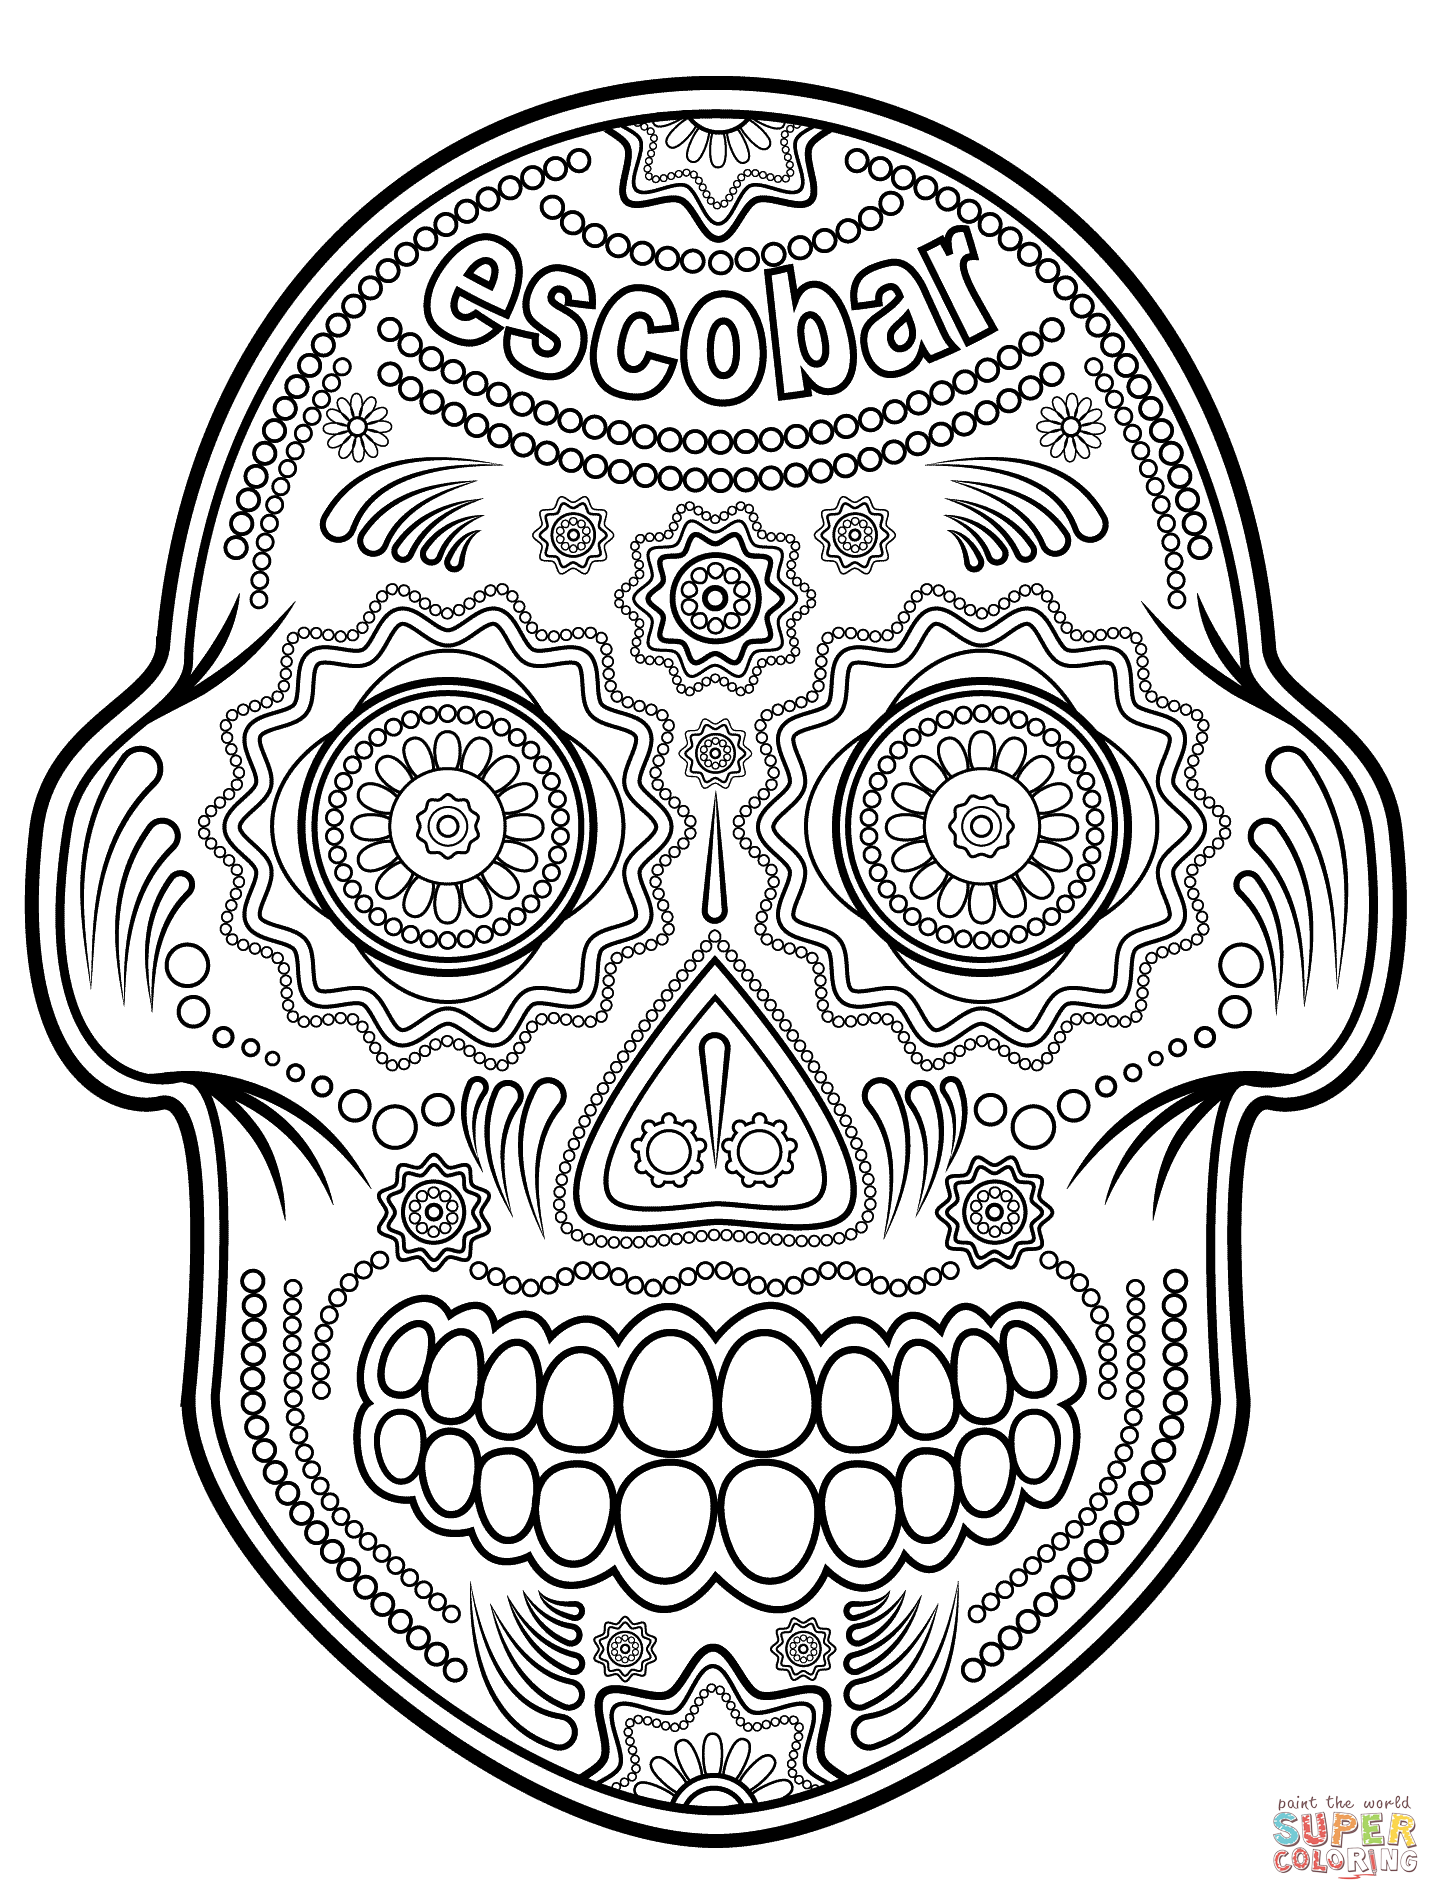 Calavera (Sugar Skull) coloring page | Free Printable Coloring Pages